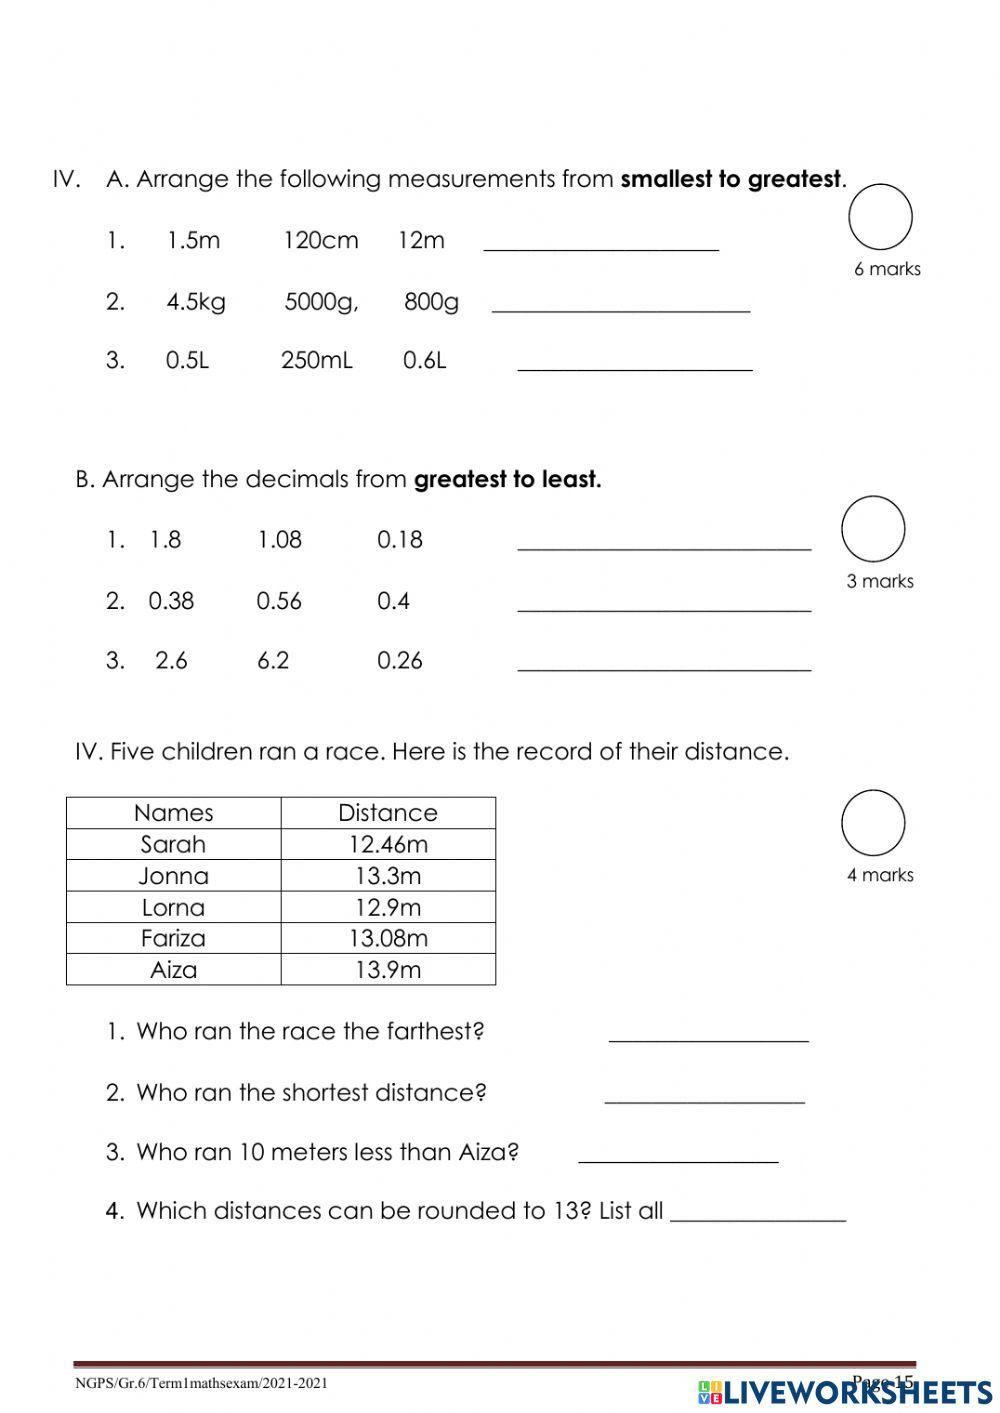 Mathematics Exam paper 2 - Grade 6